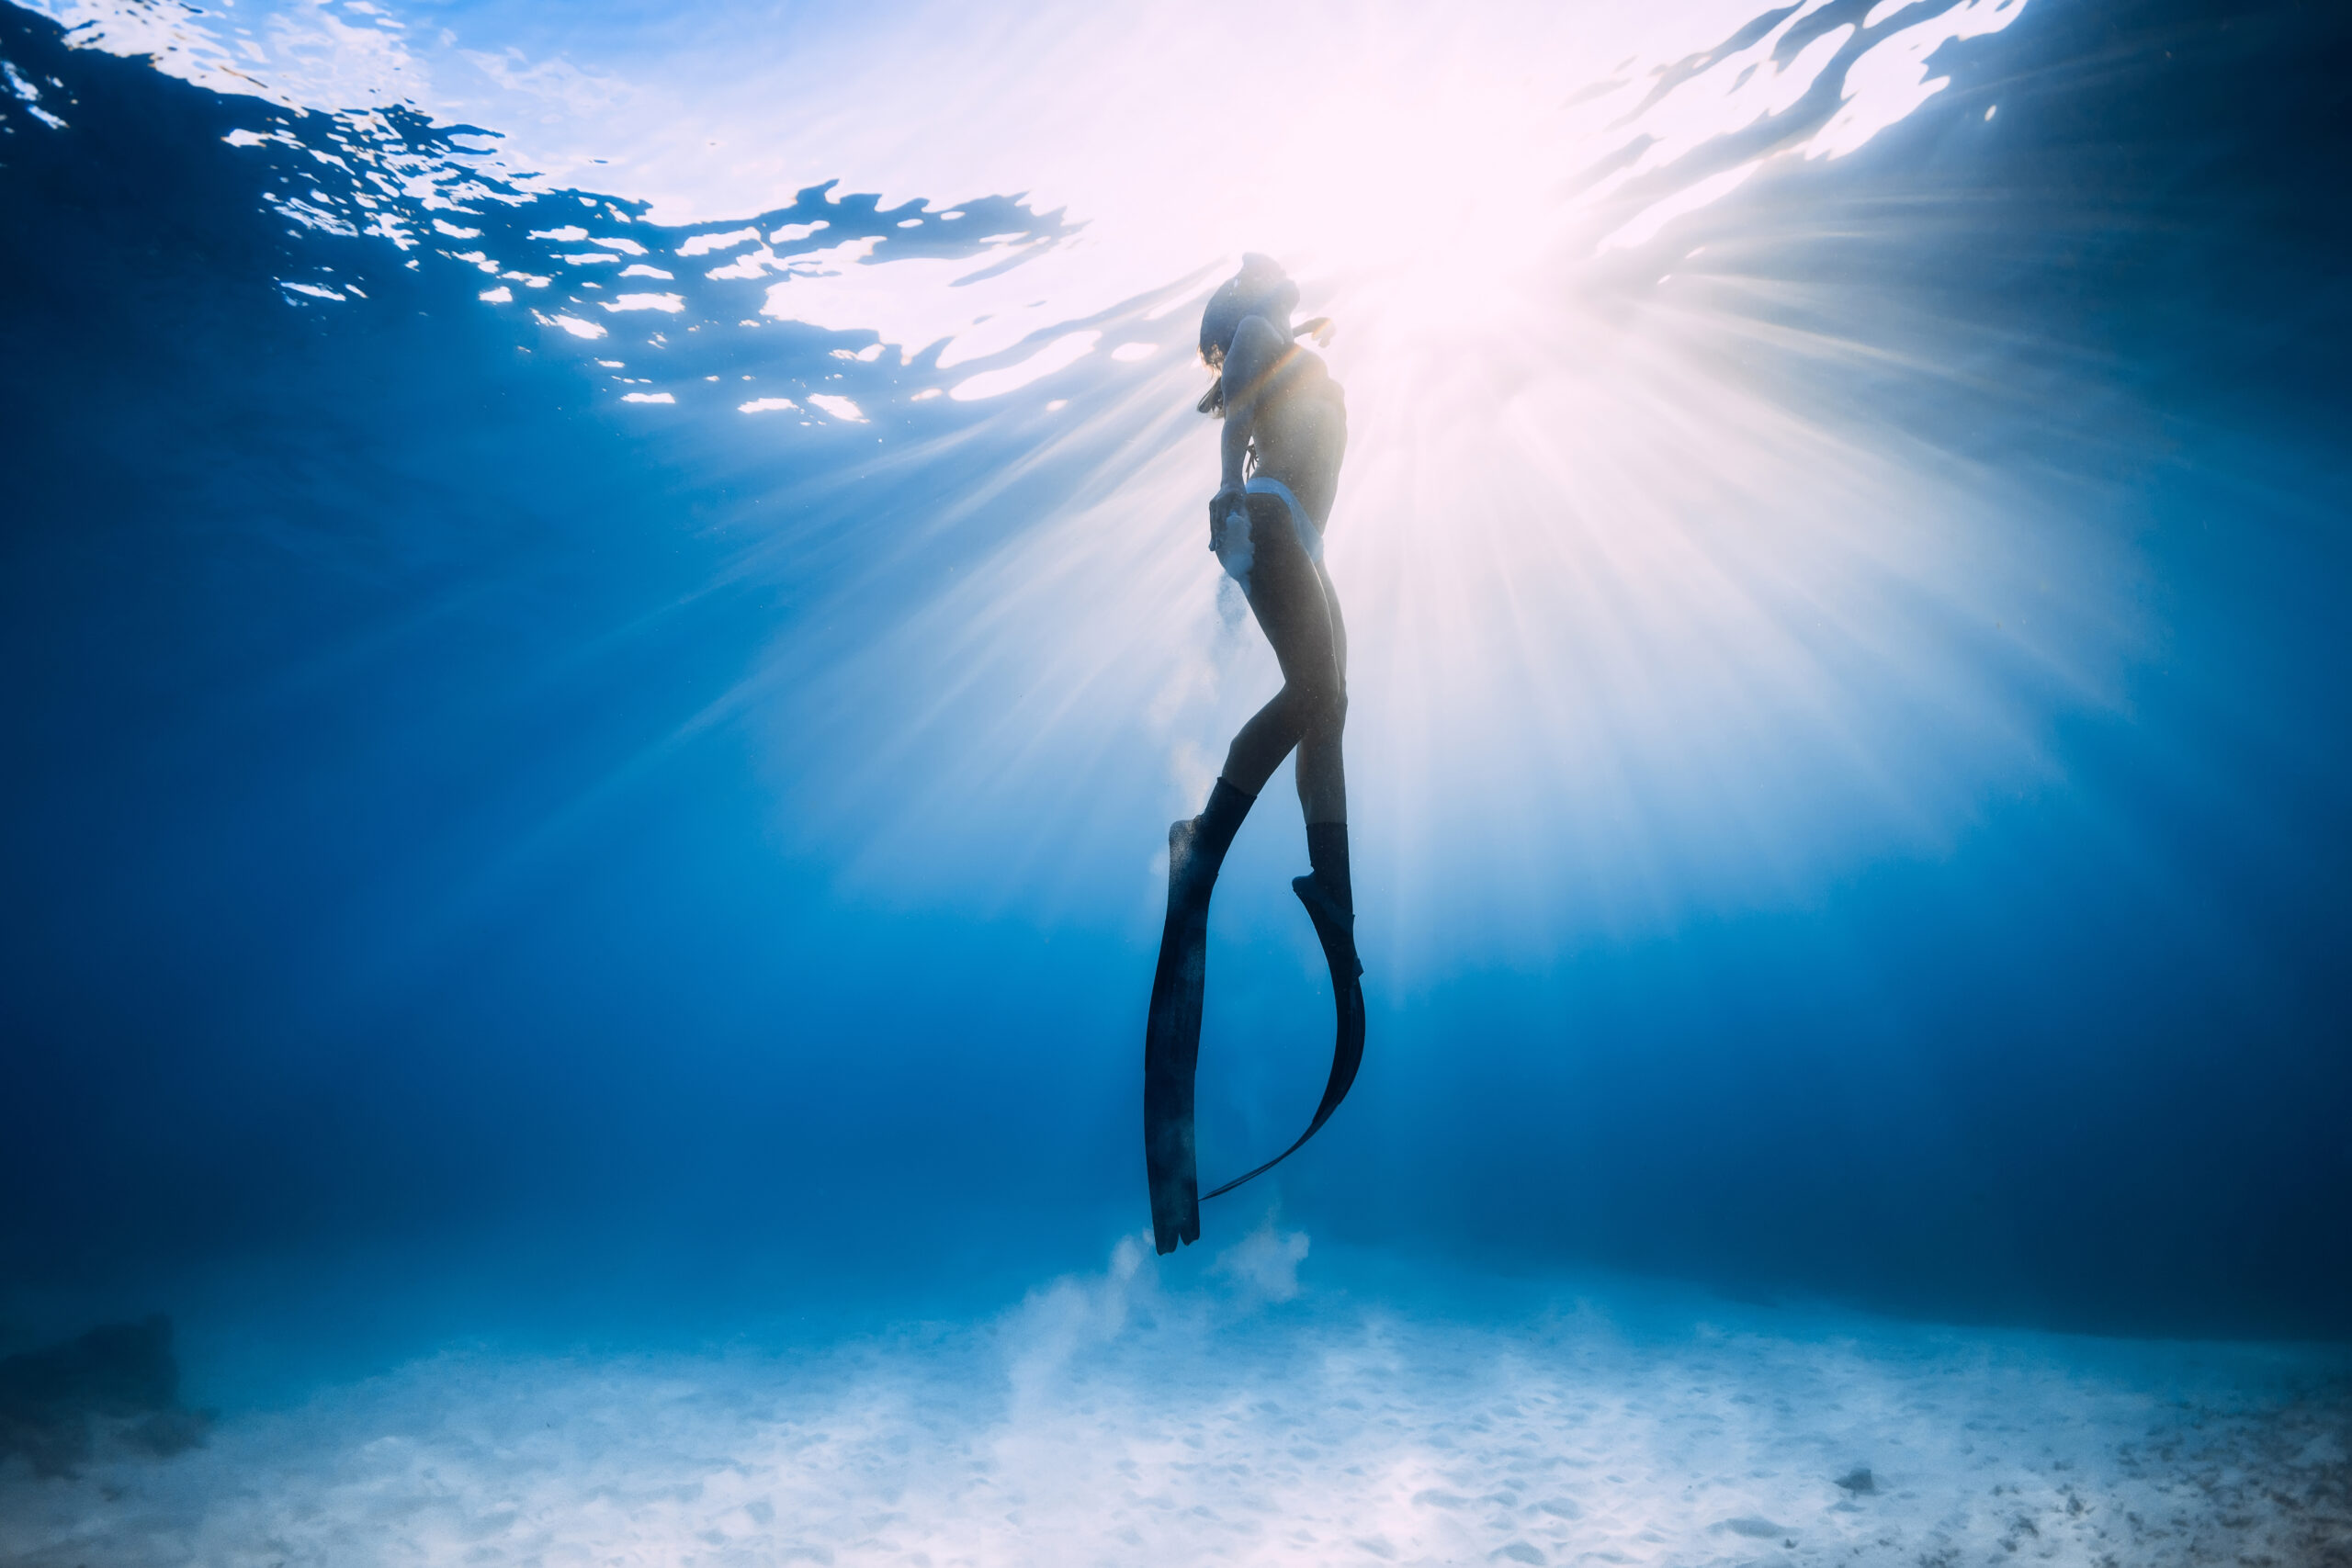 freediver-girl-in-bikini-over-sandy-sea